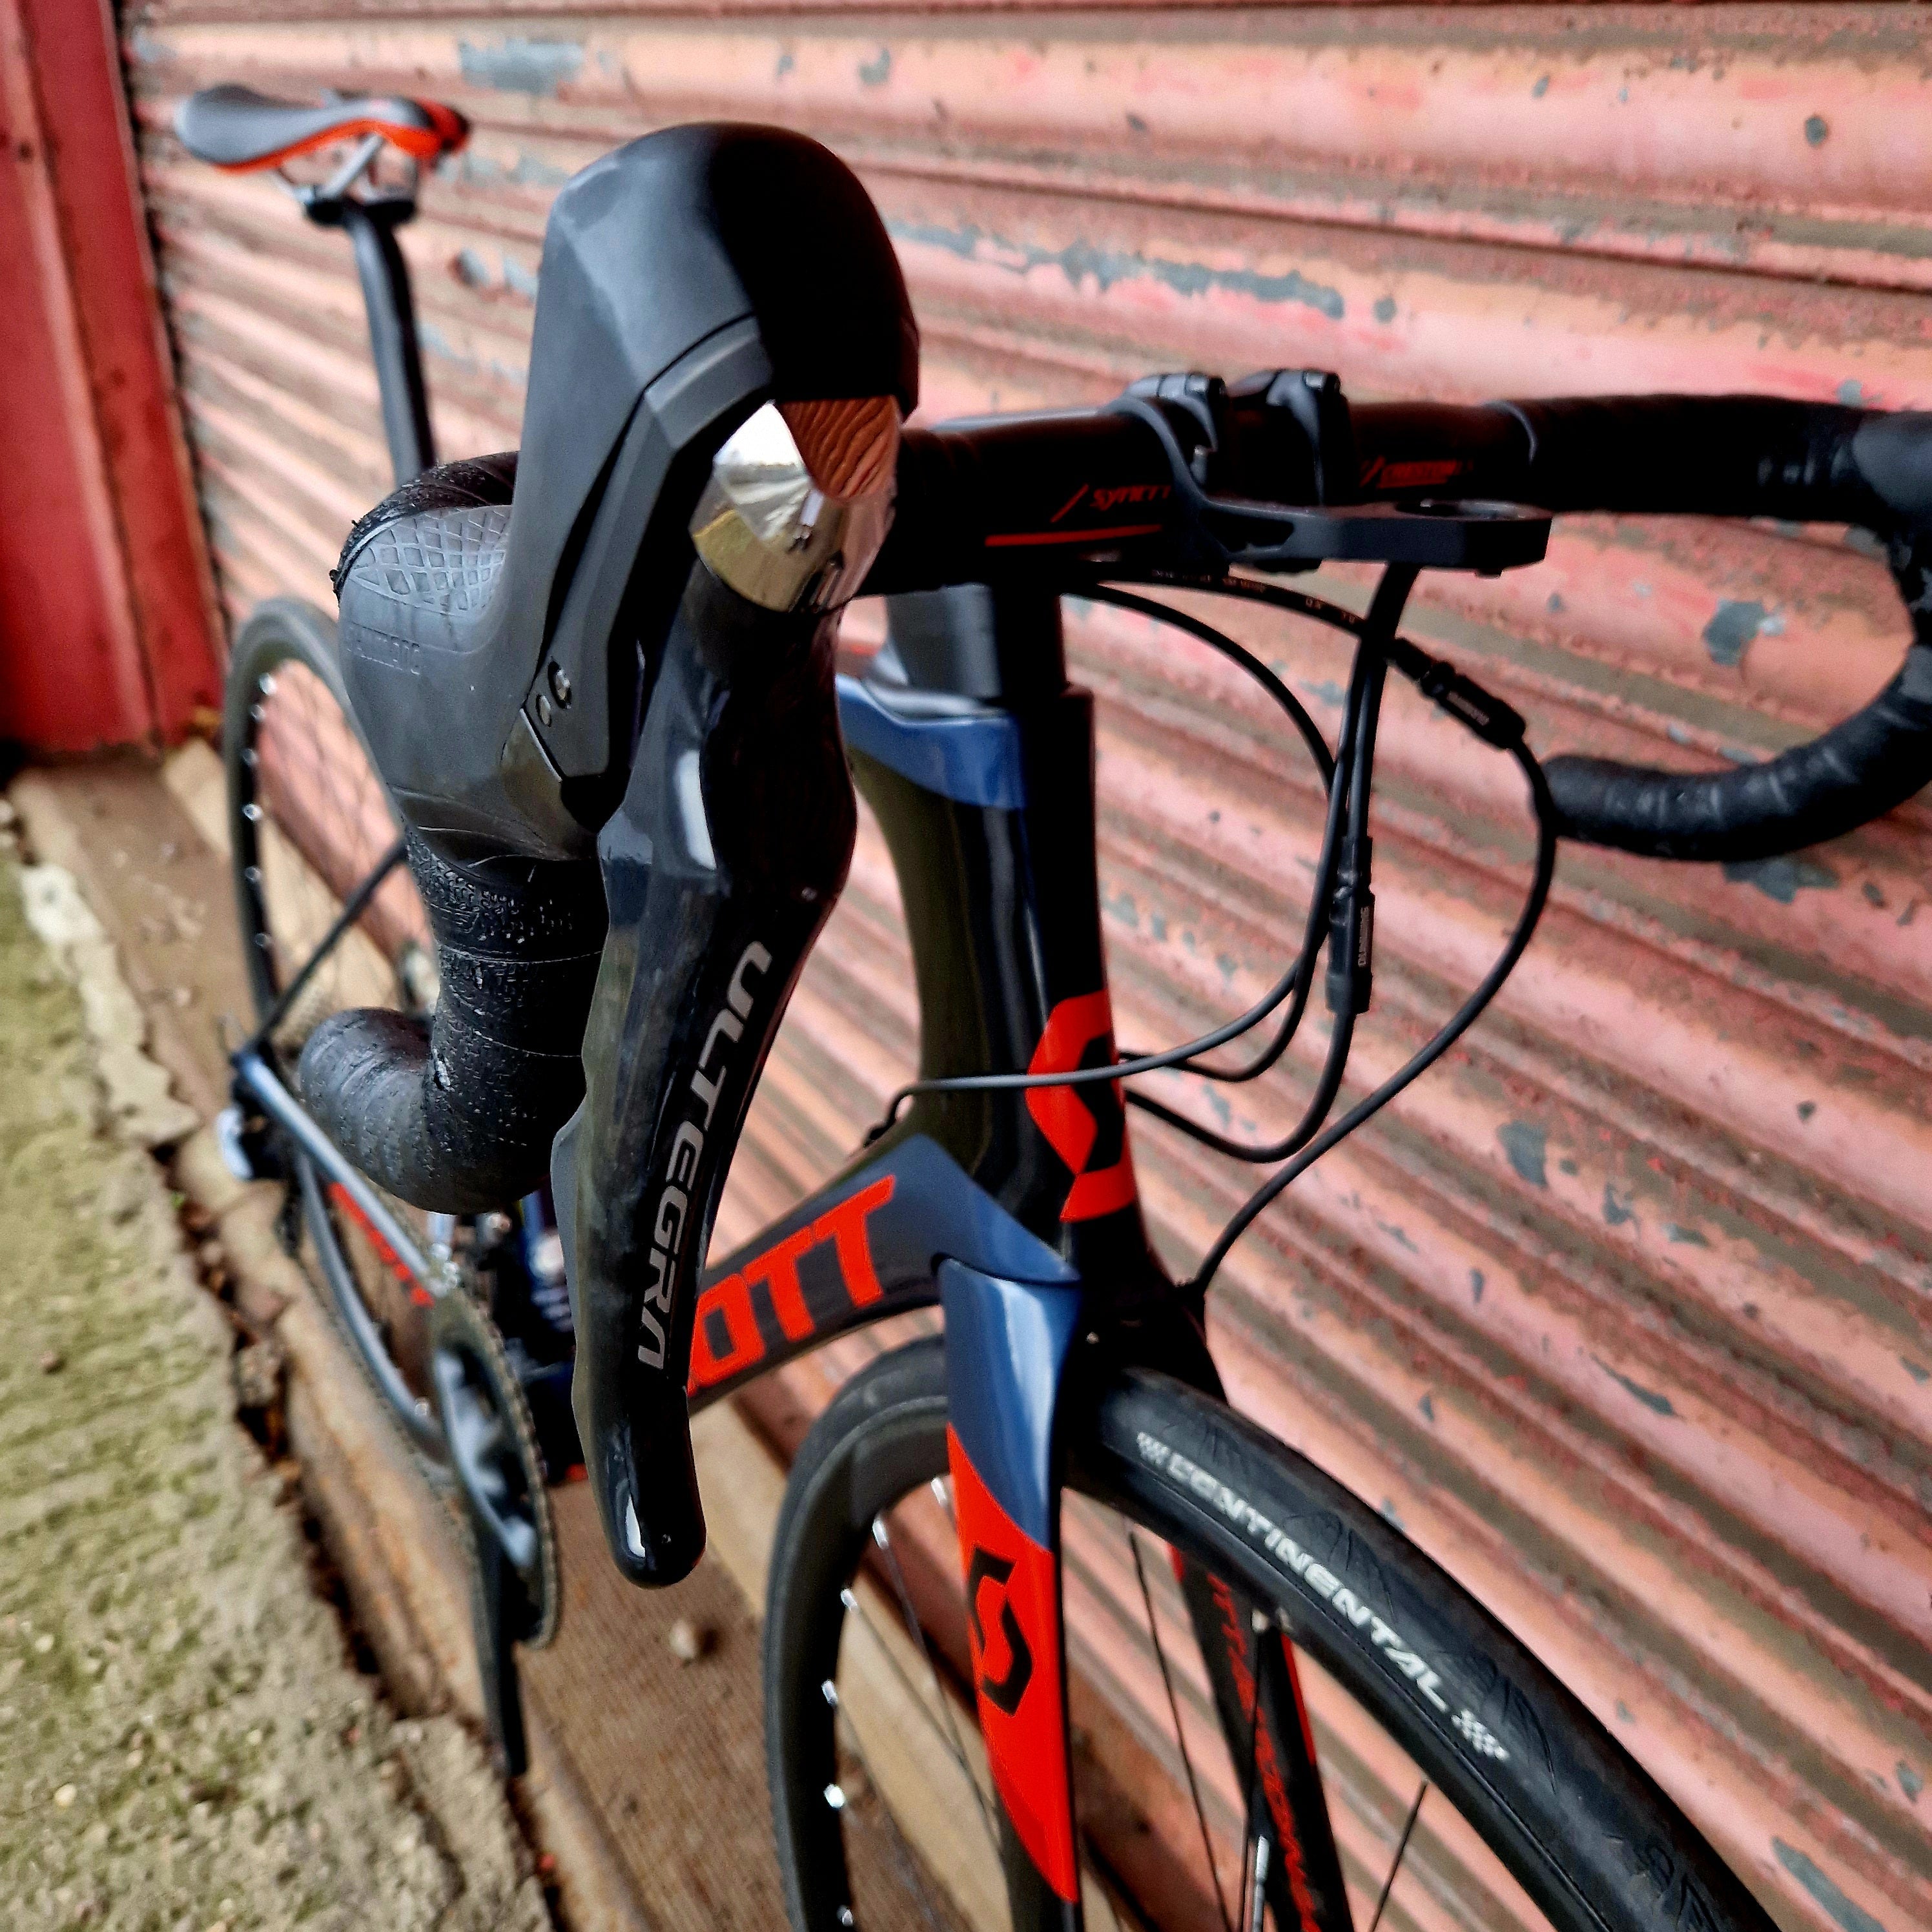 Scott Foil 20 Shimano Ultegra Disc Carbon Aero Road Race Bike - 56cm